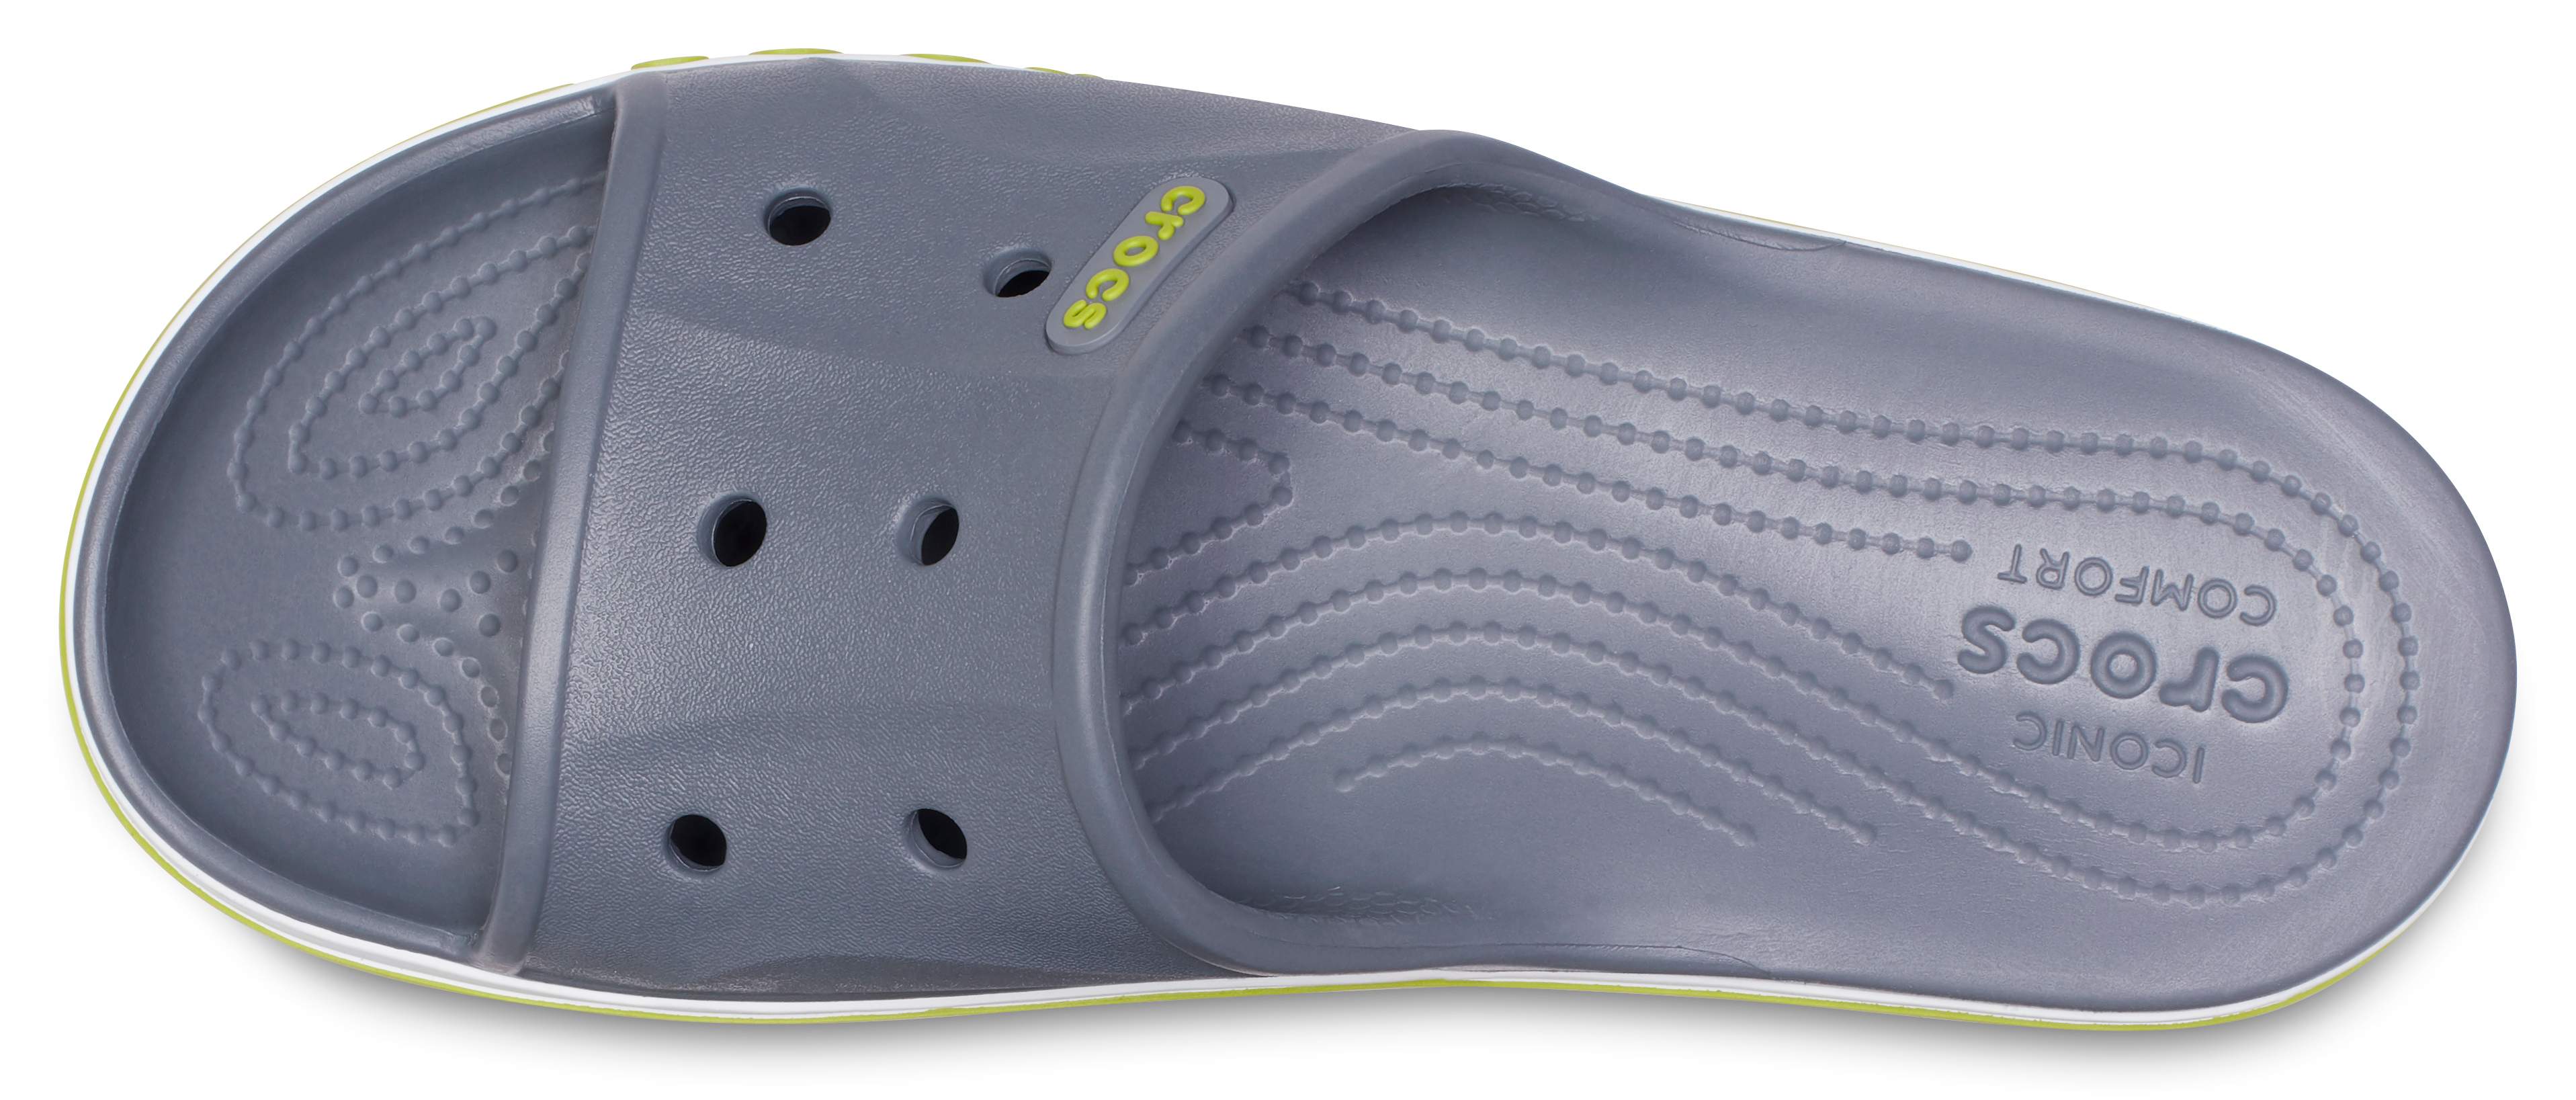 crocs comfort iconic